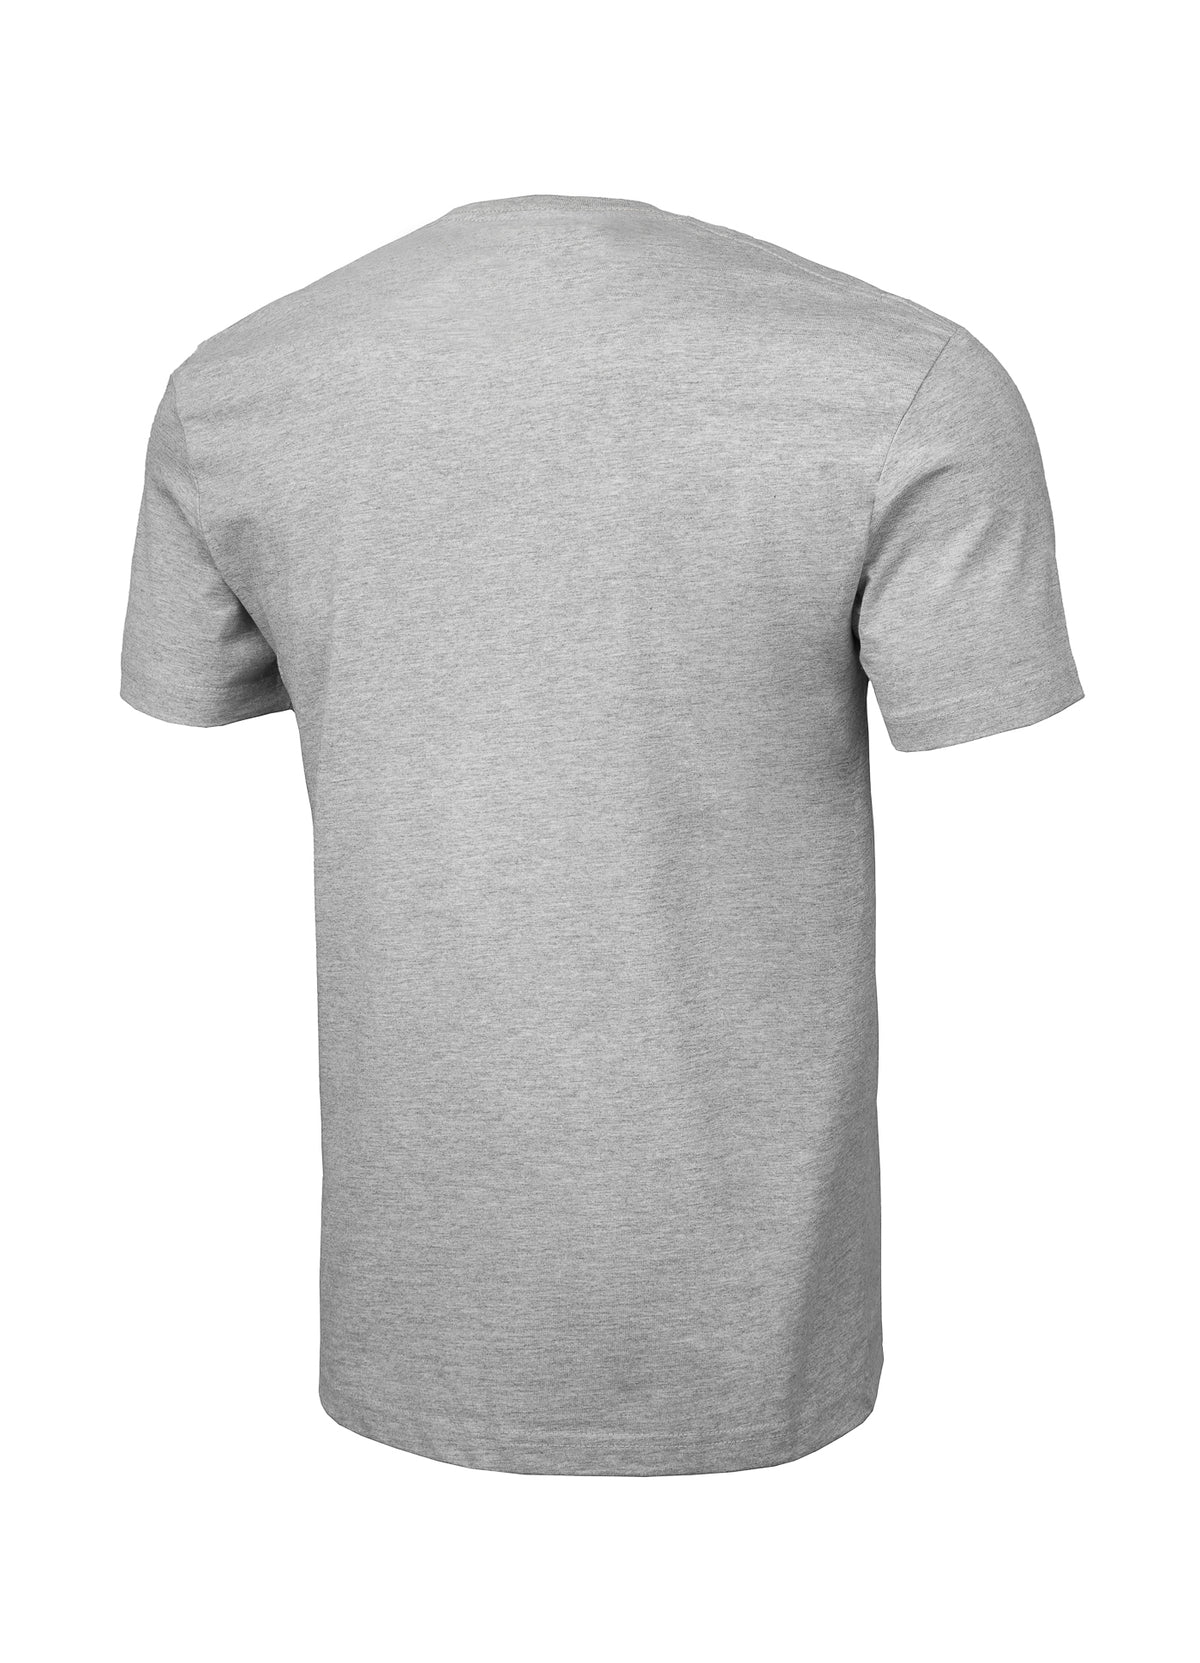 SMALL LOGO 21 T-Shirt  Grey MLG.